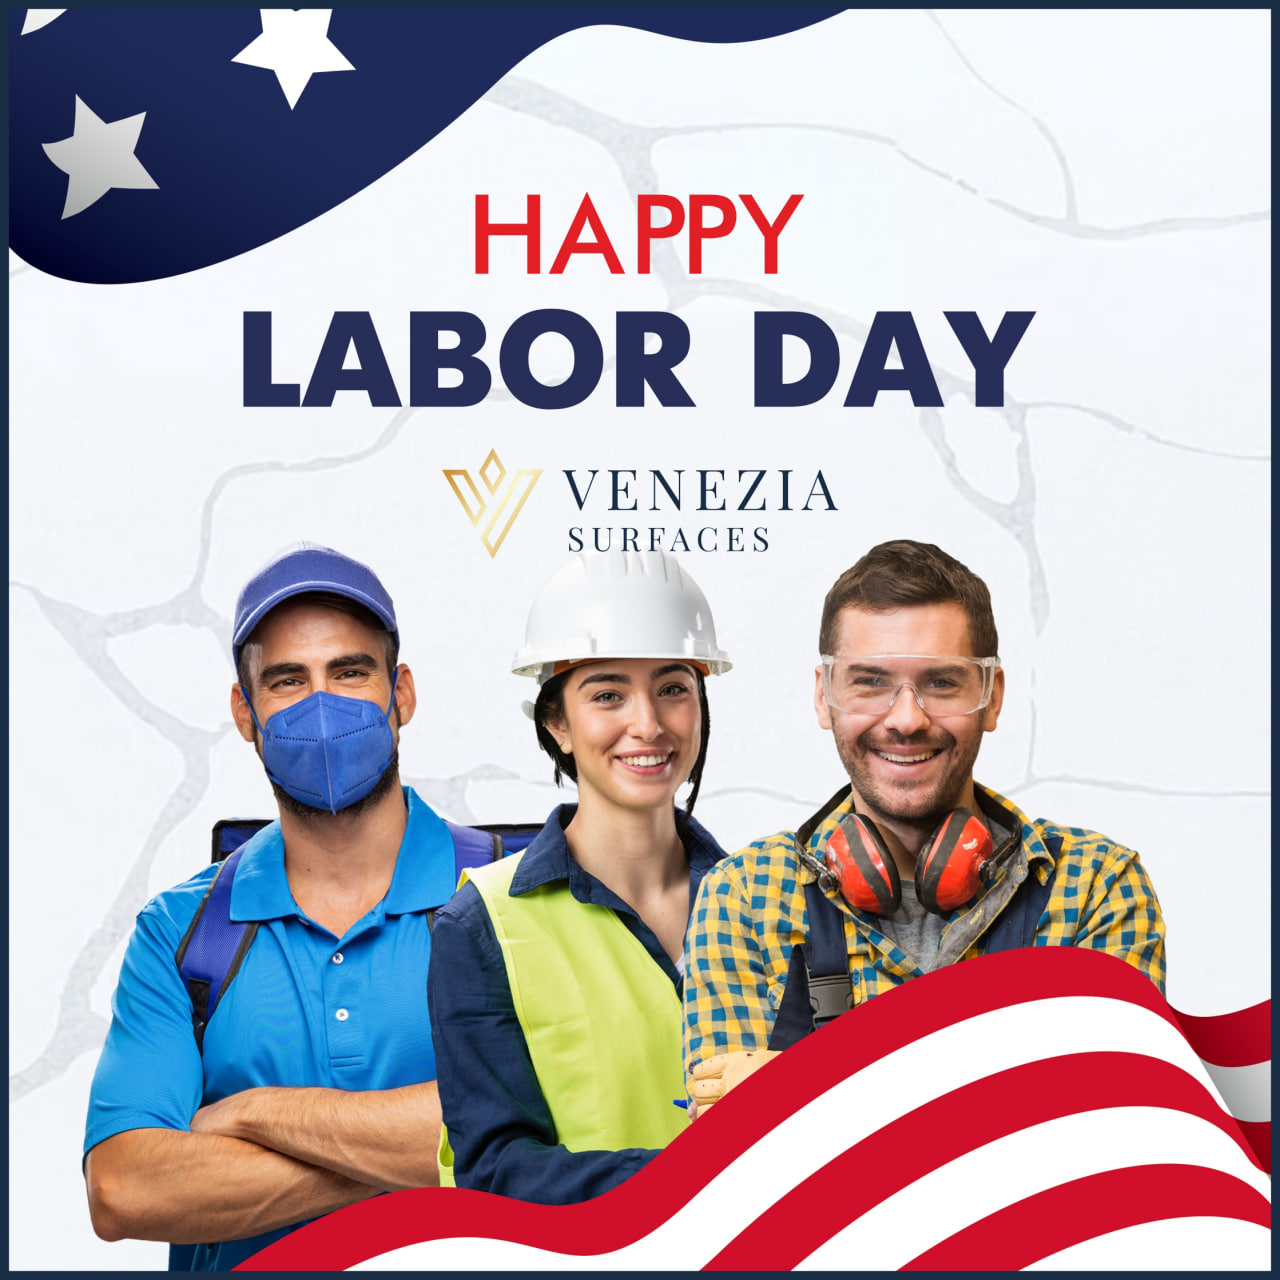 Happy Labor Day, everyone! 